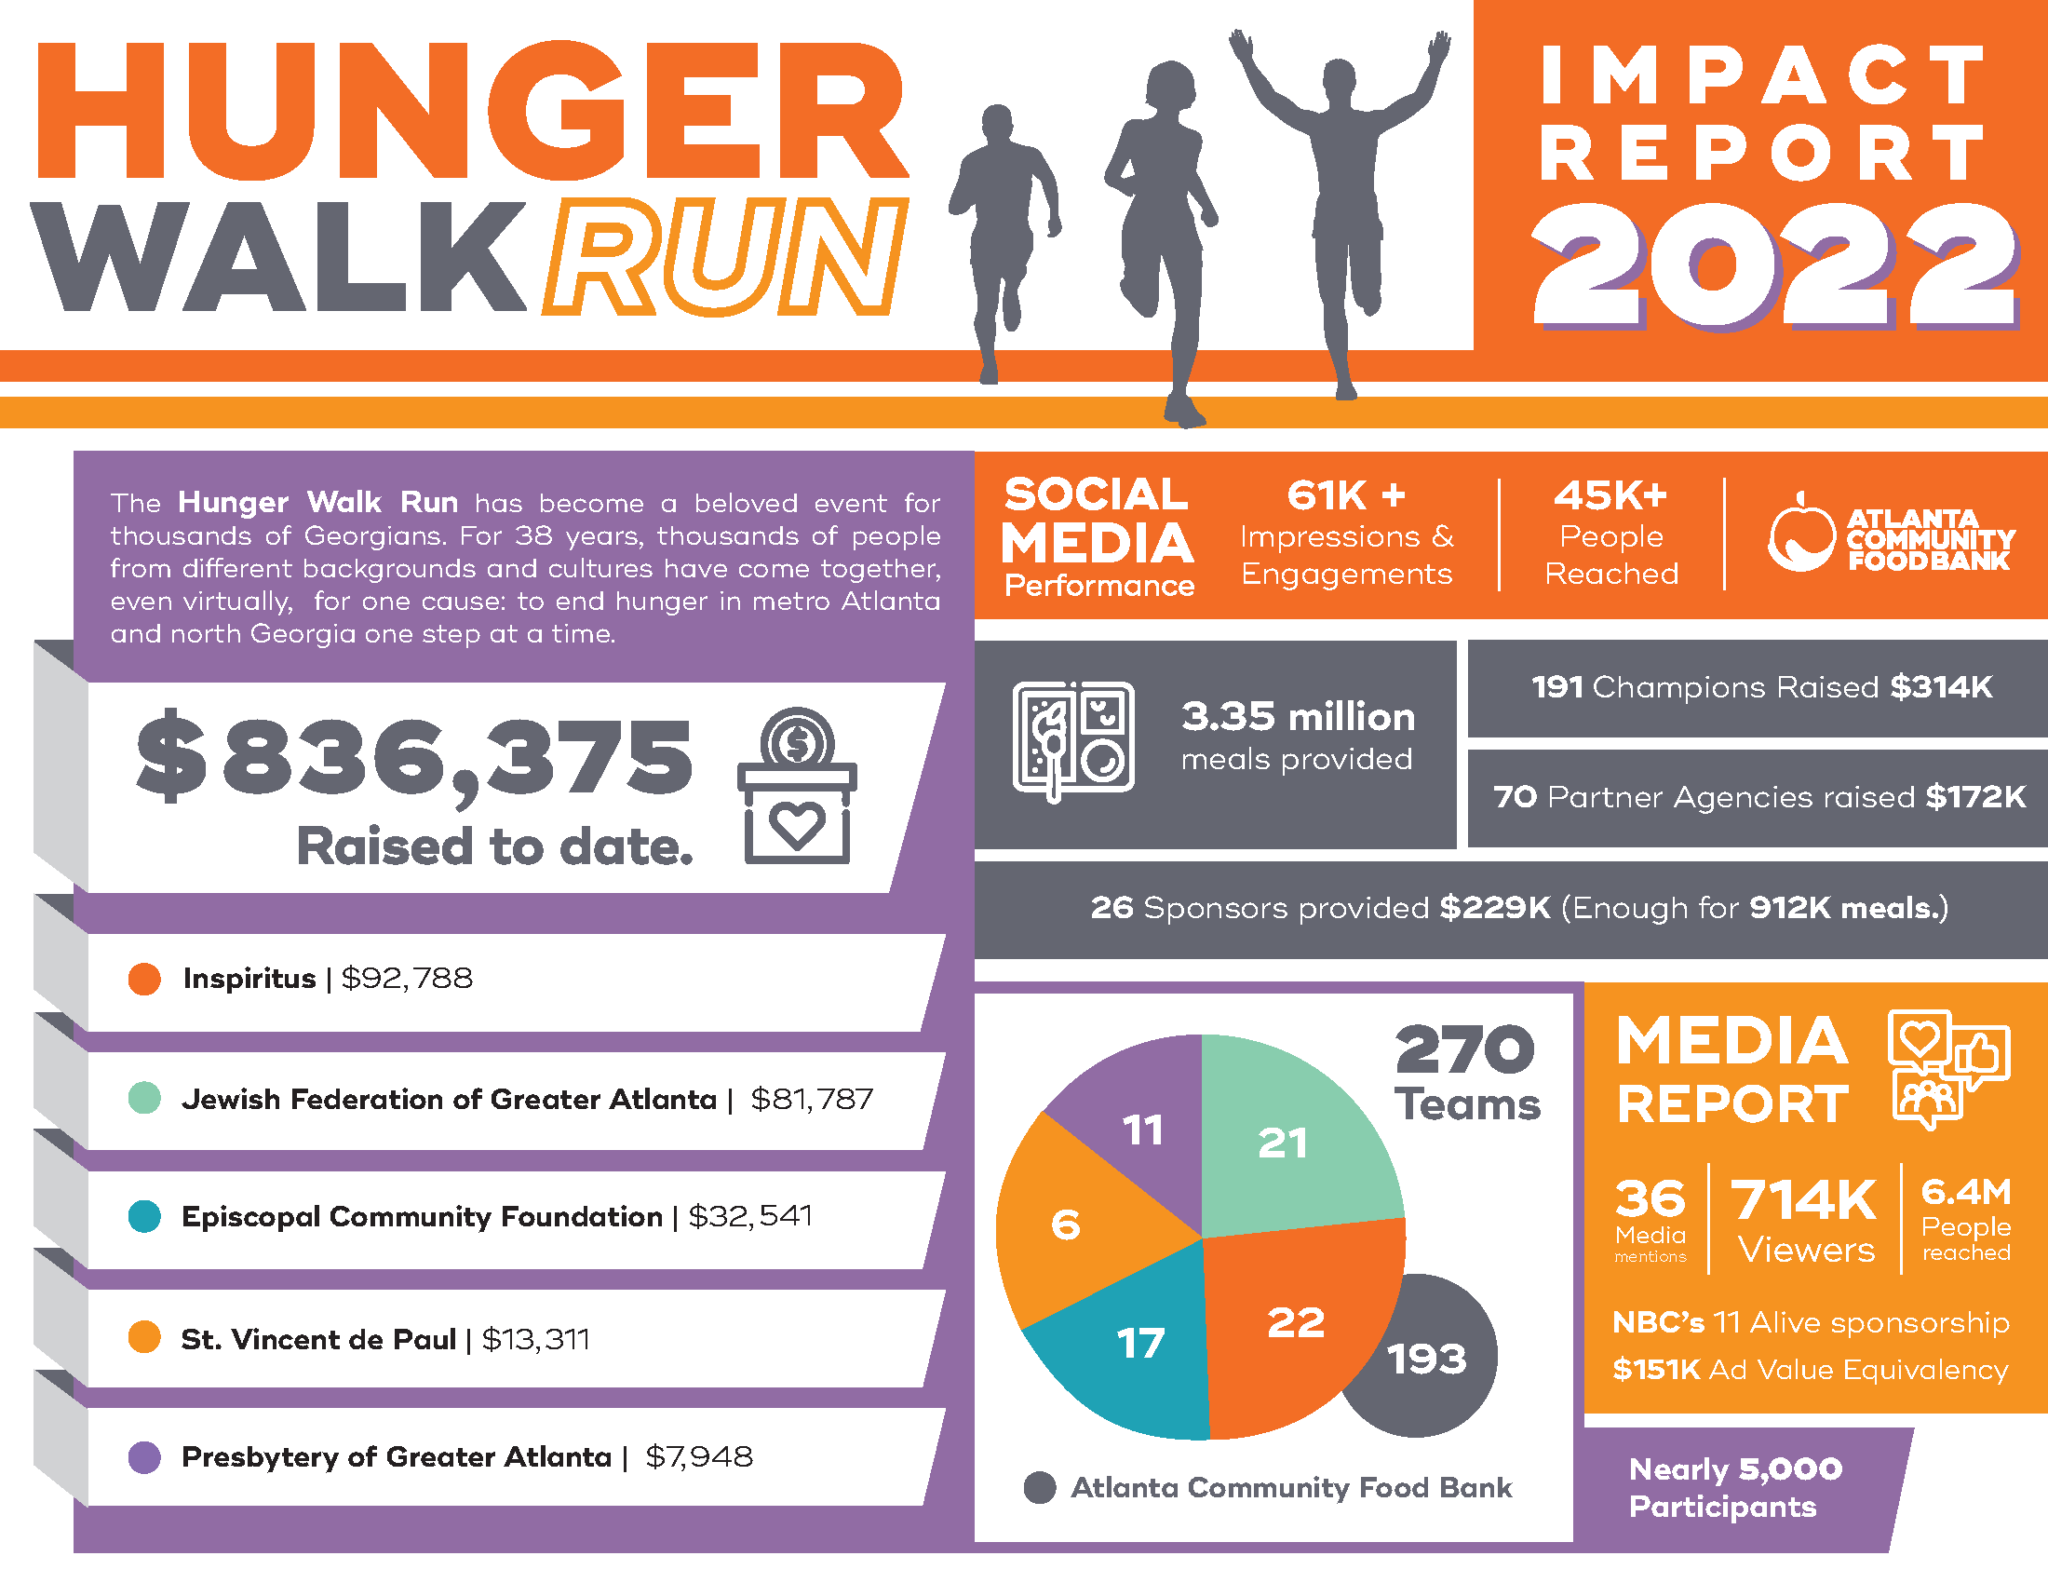 Hunger Walk Run 2023 Episcopal Community Foundation